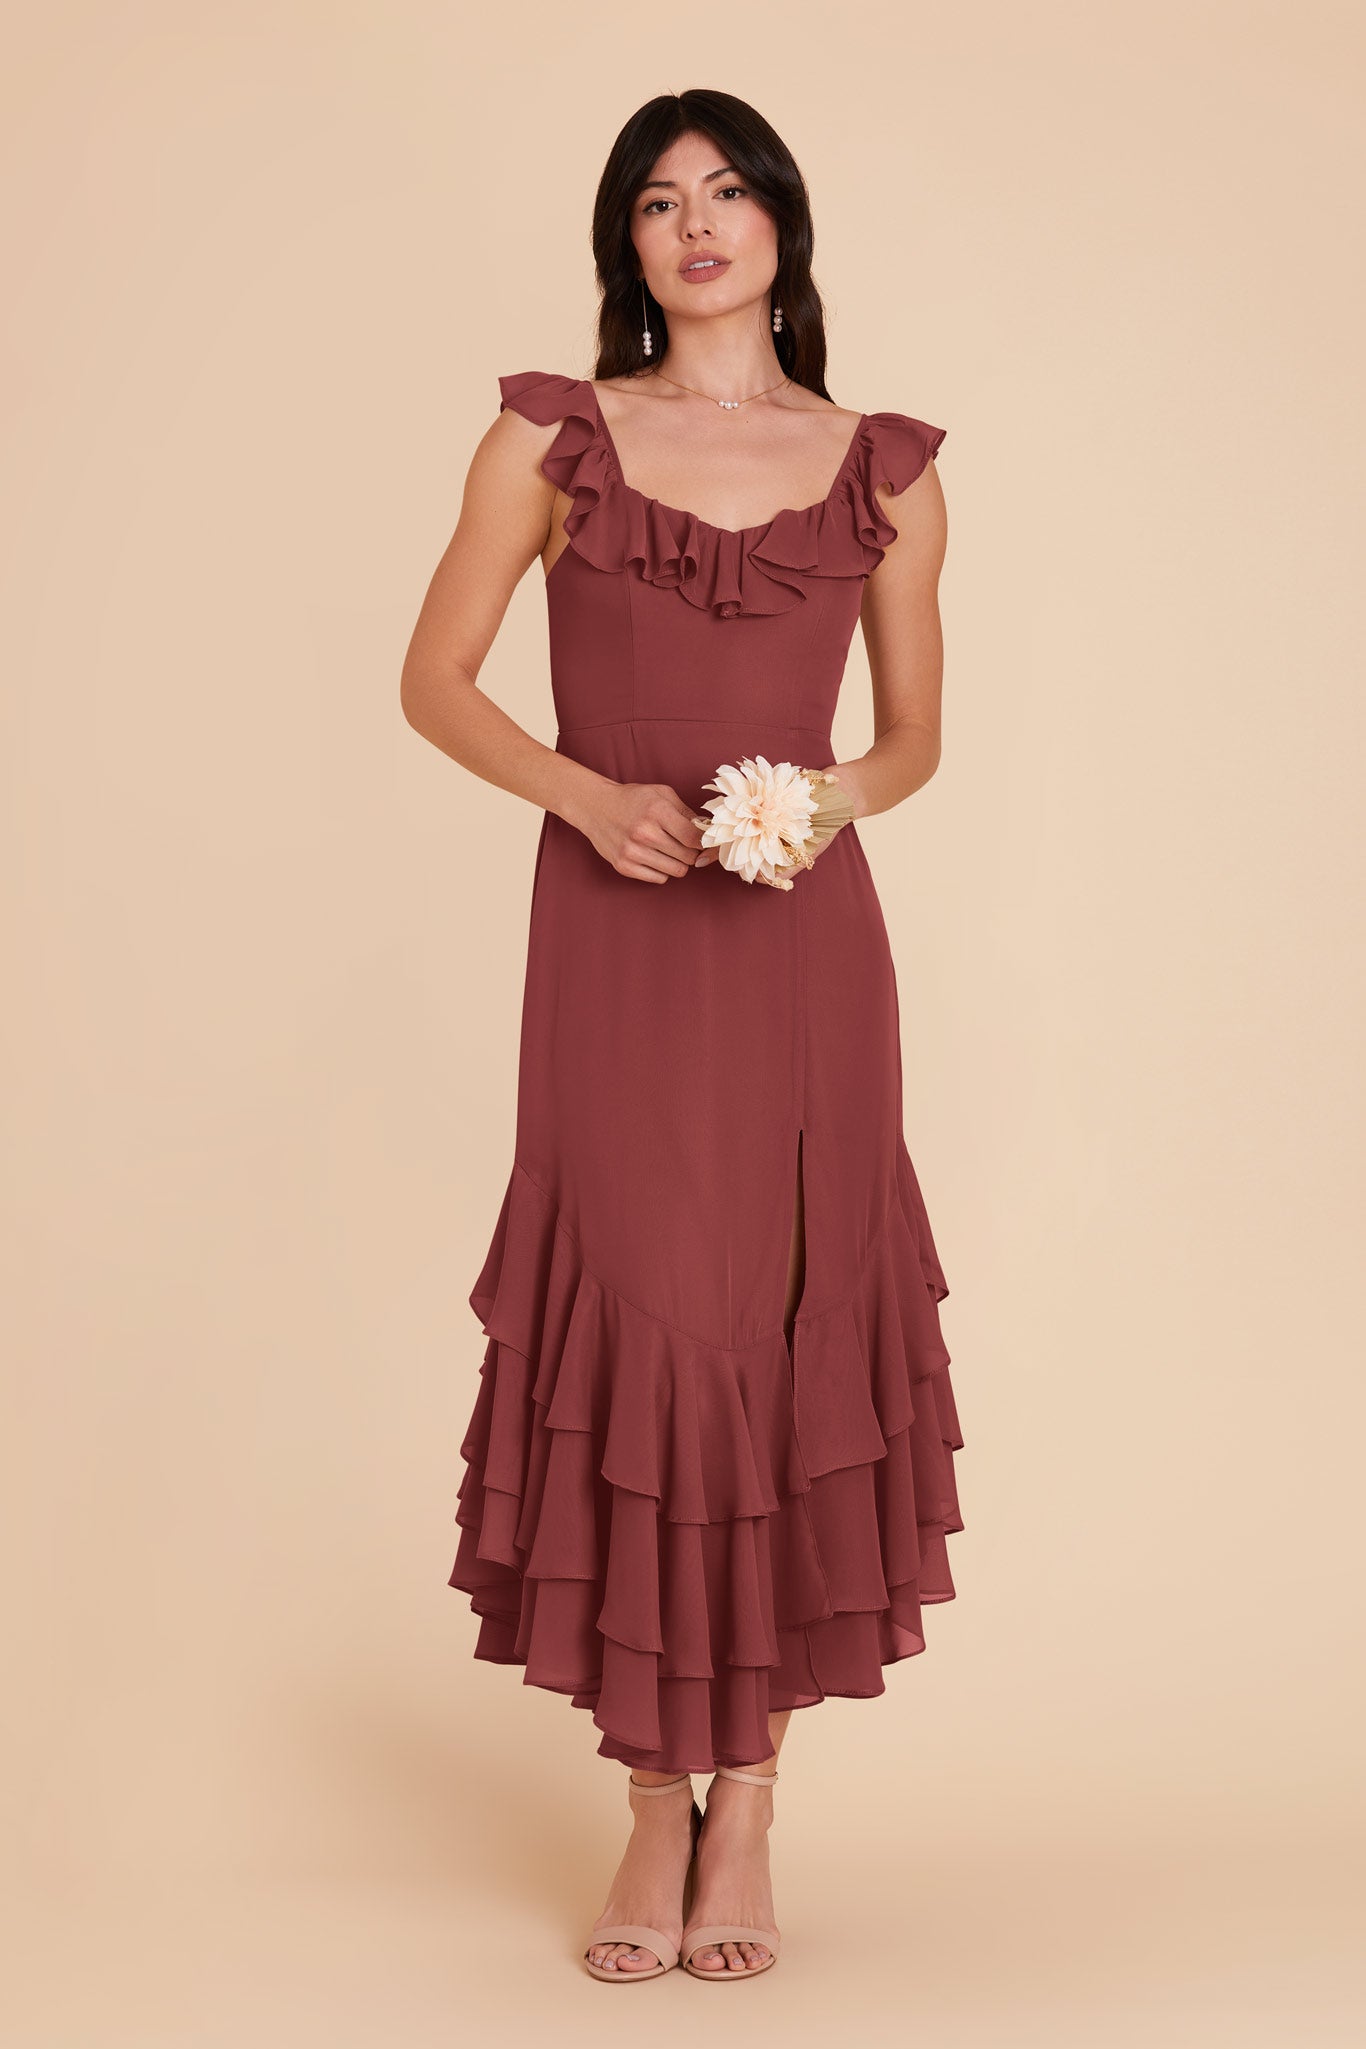 Rosewood Ginny Chiffon Dress by Birdy Grey